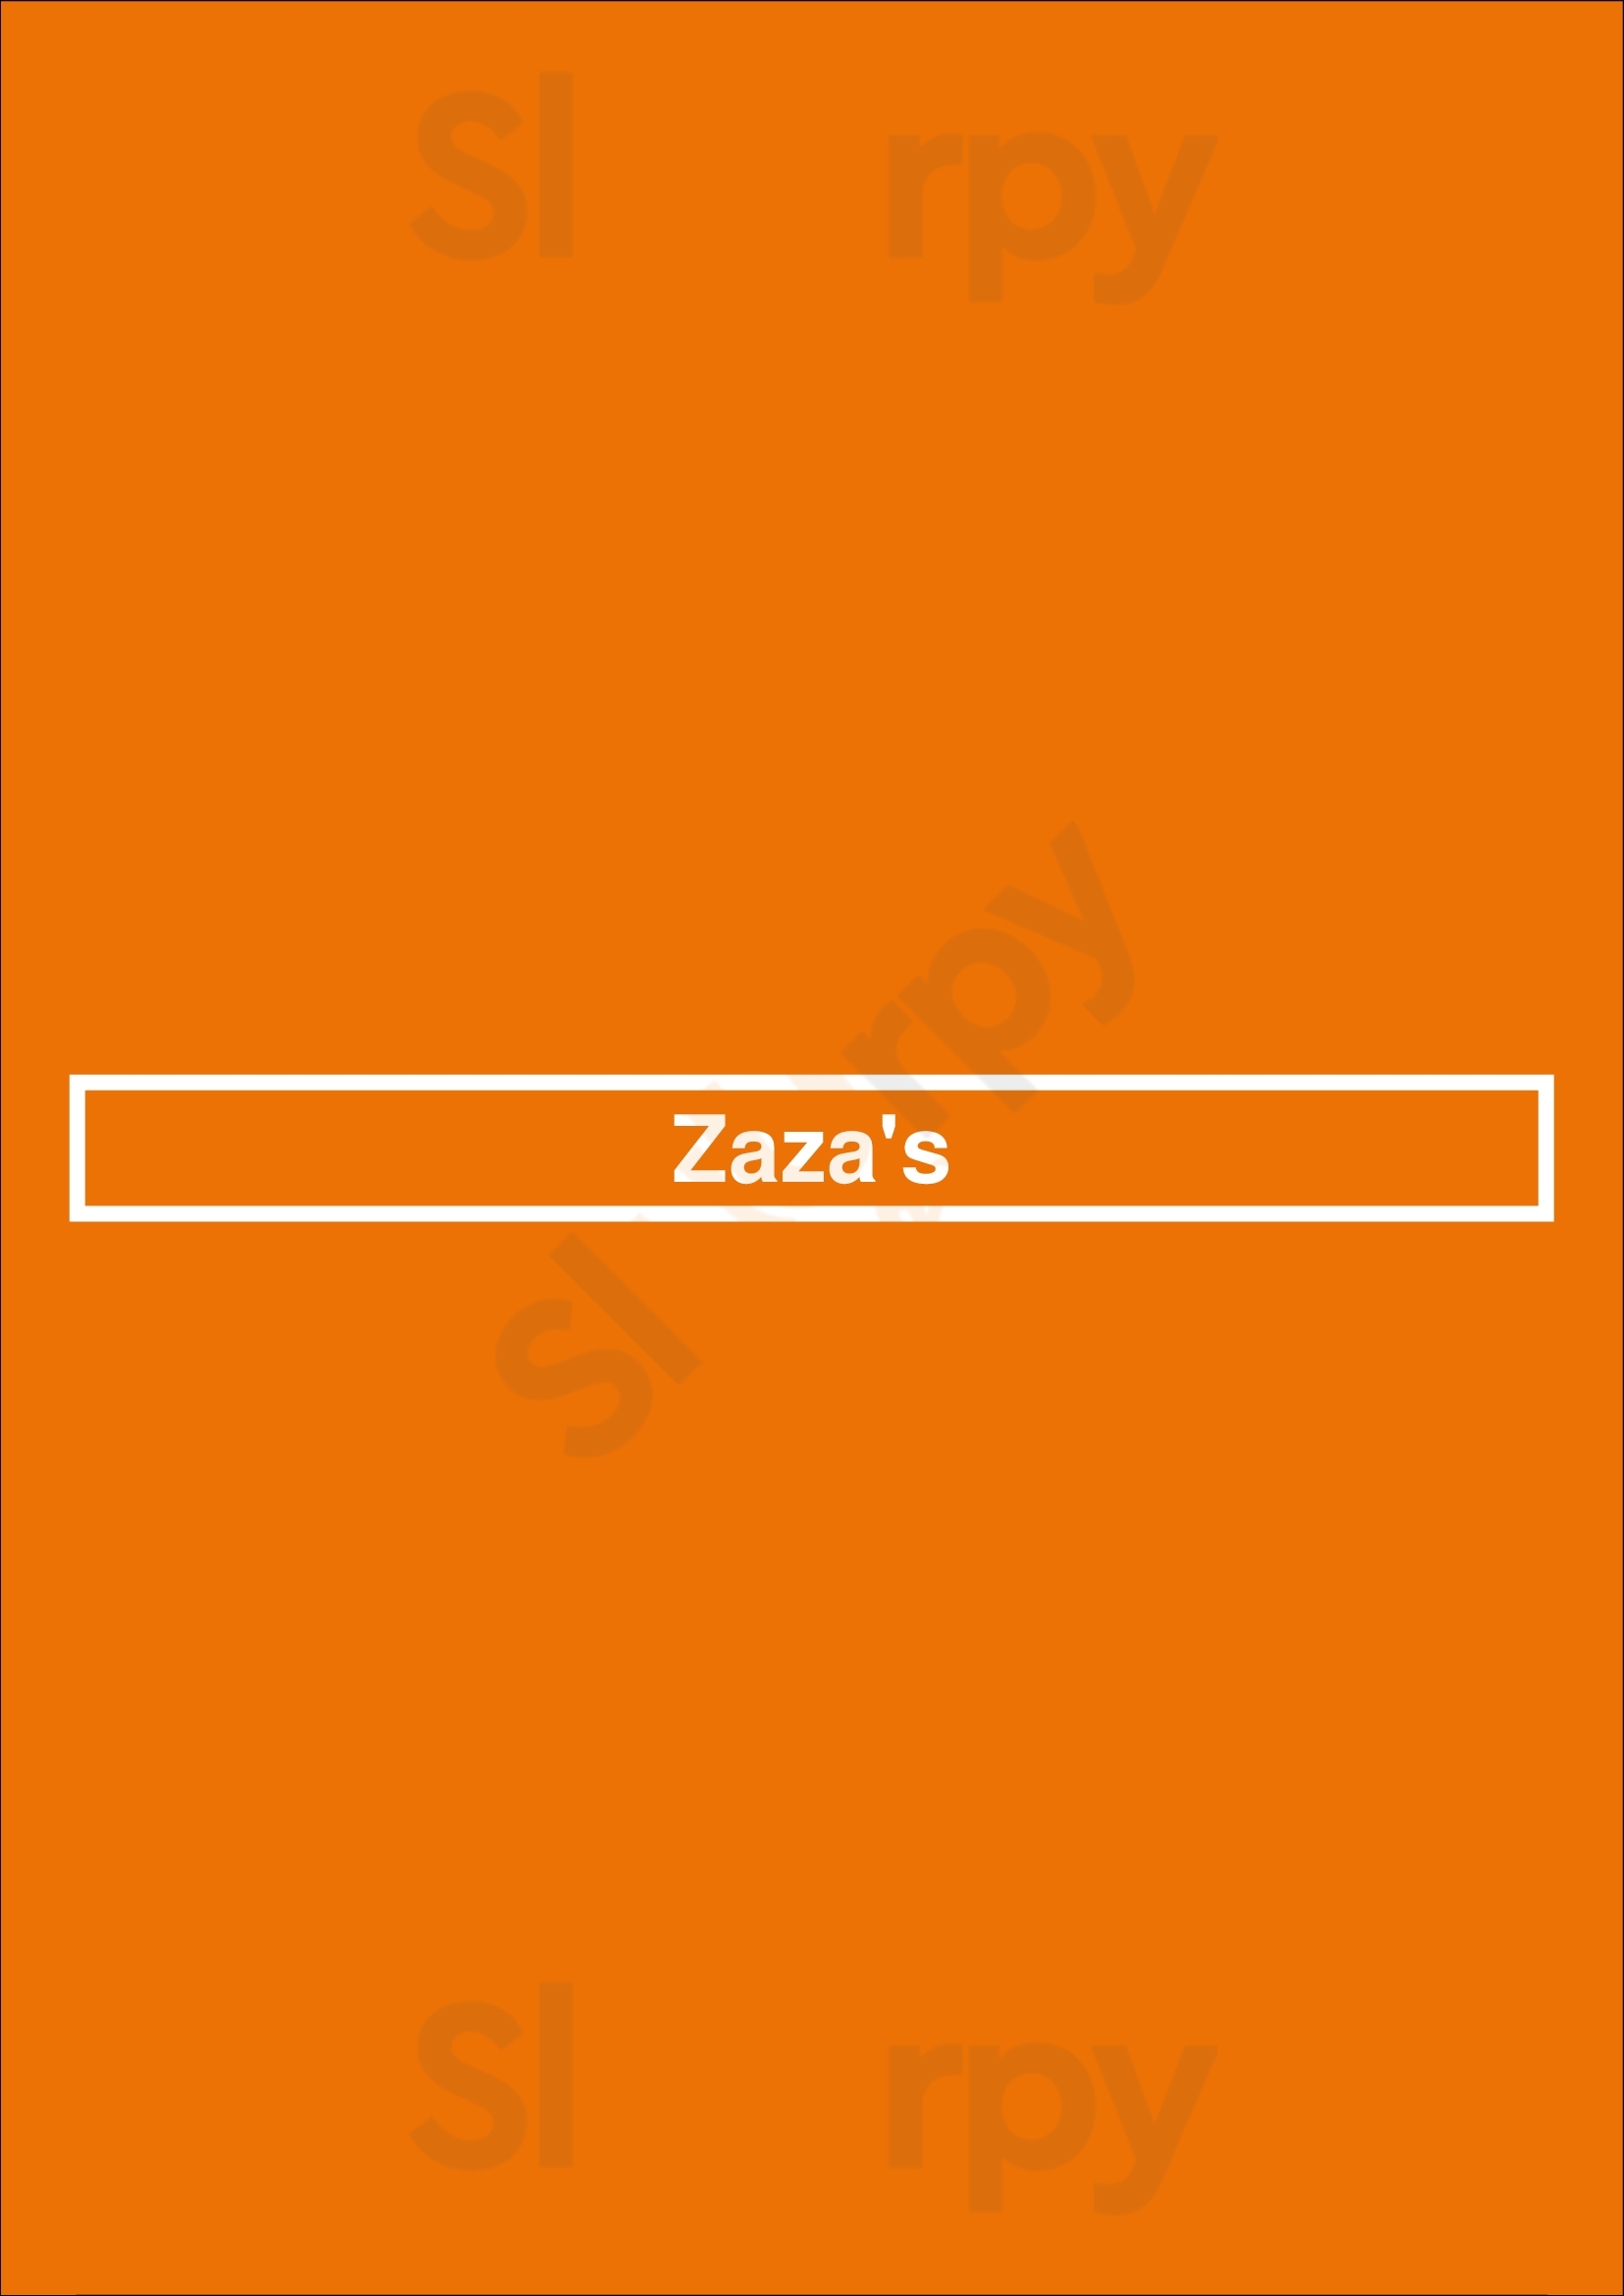 Zaza's Amsterdam Menu - 1